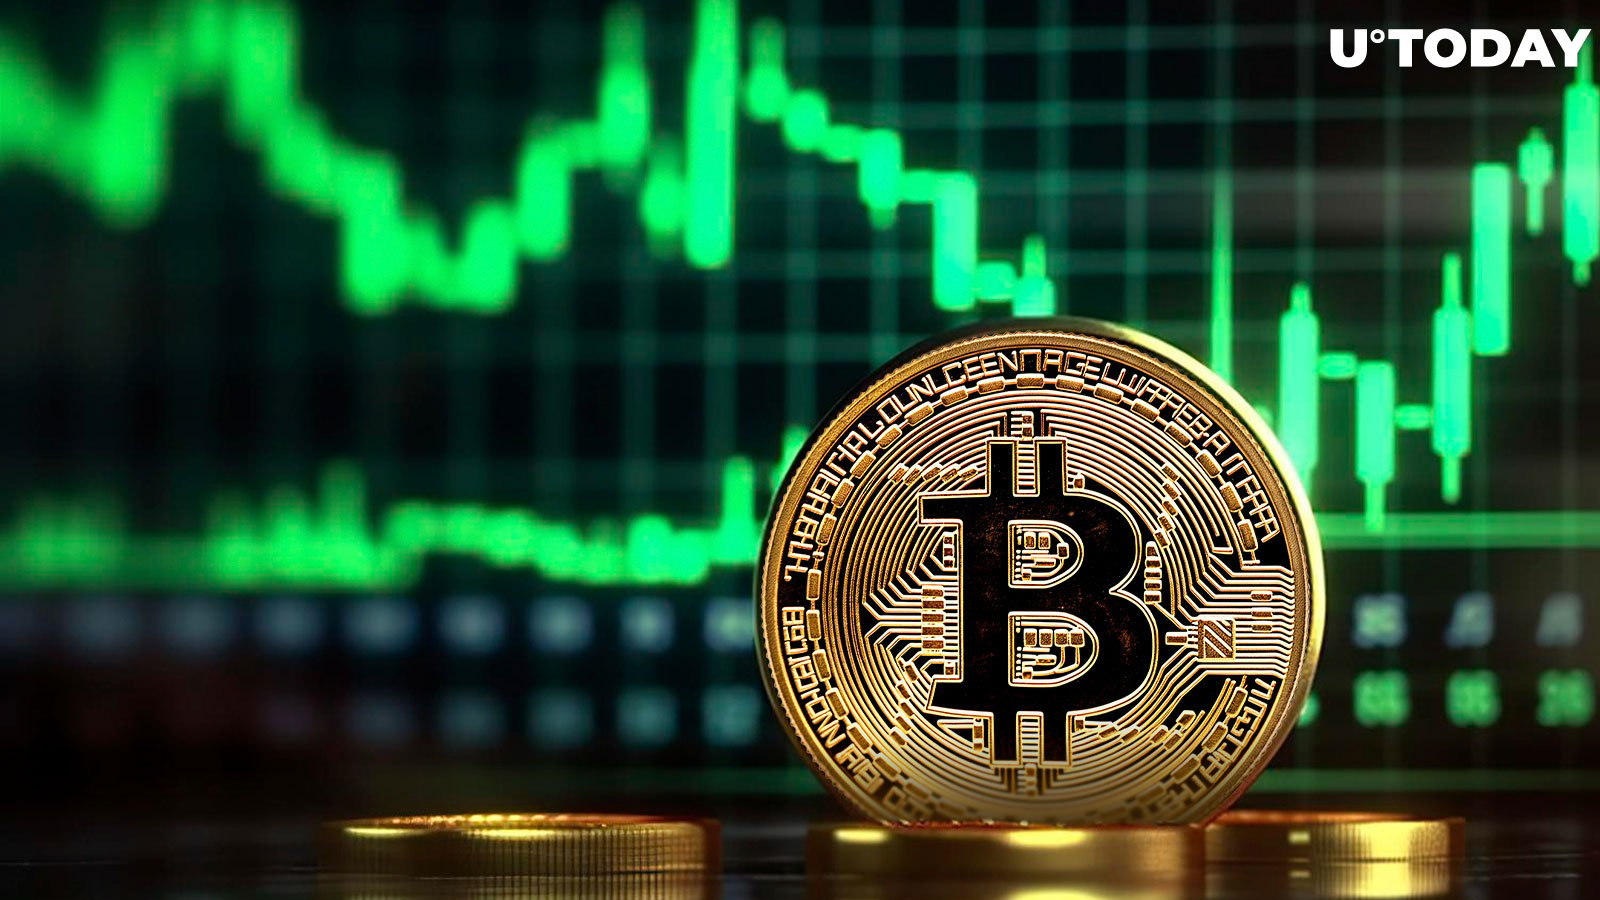 Bitcoin (BTC) Preparing for Next Parabolic Run, Say Analysts